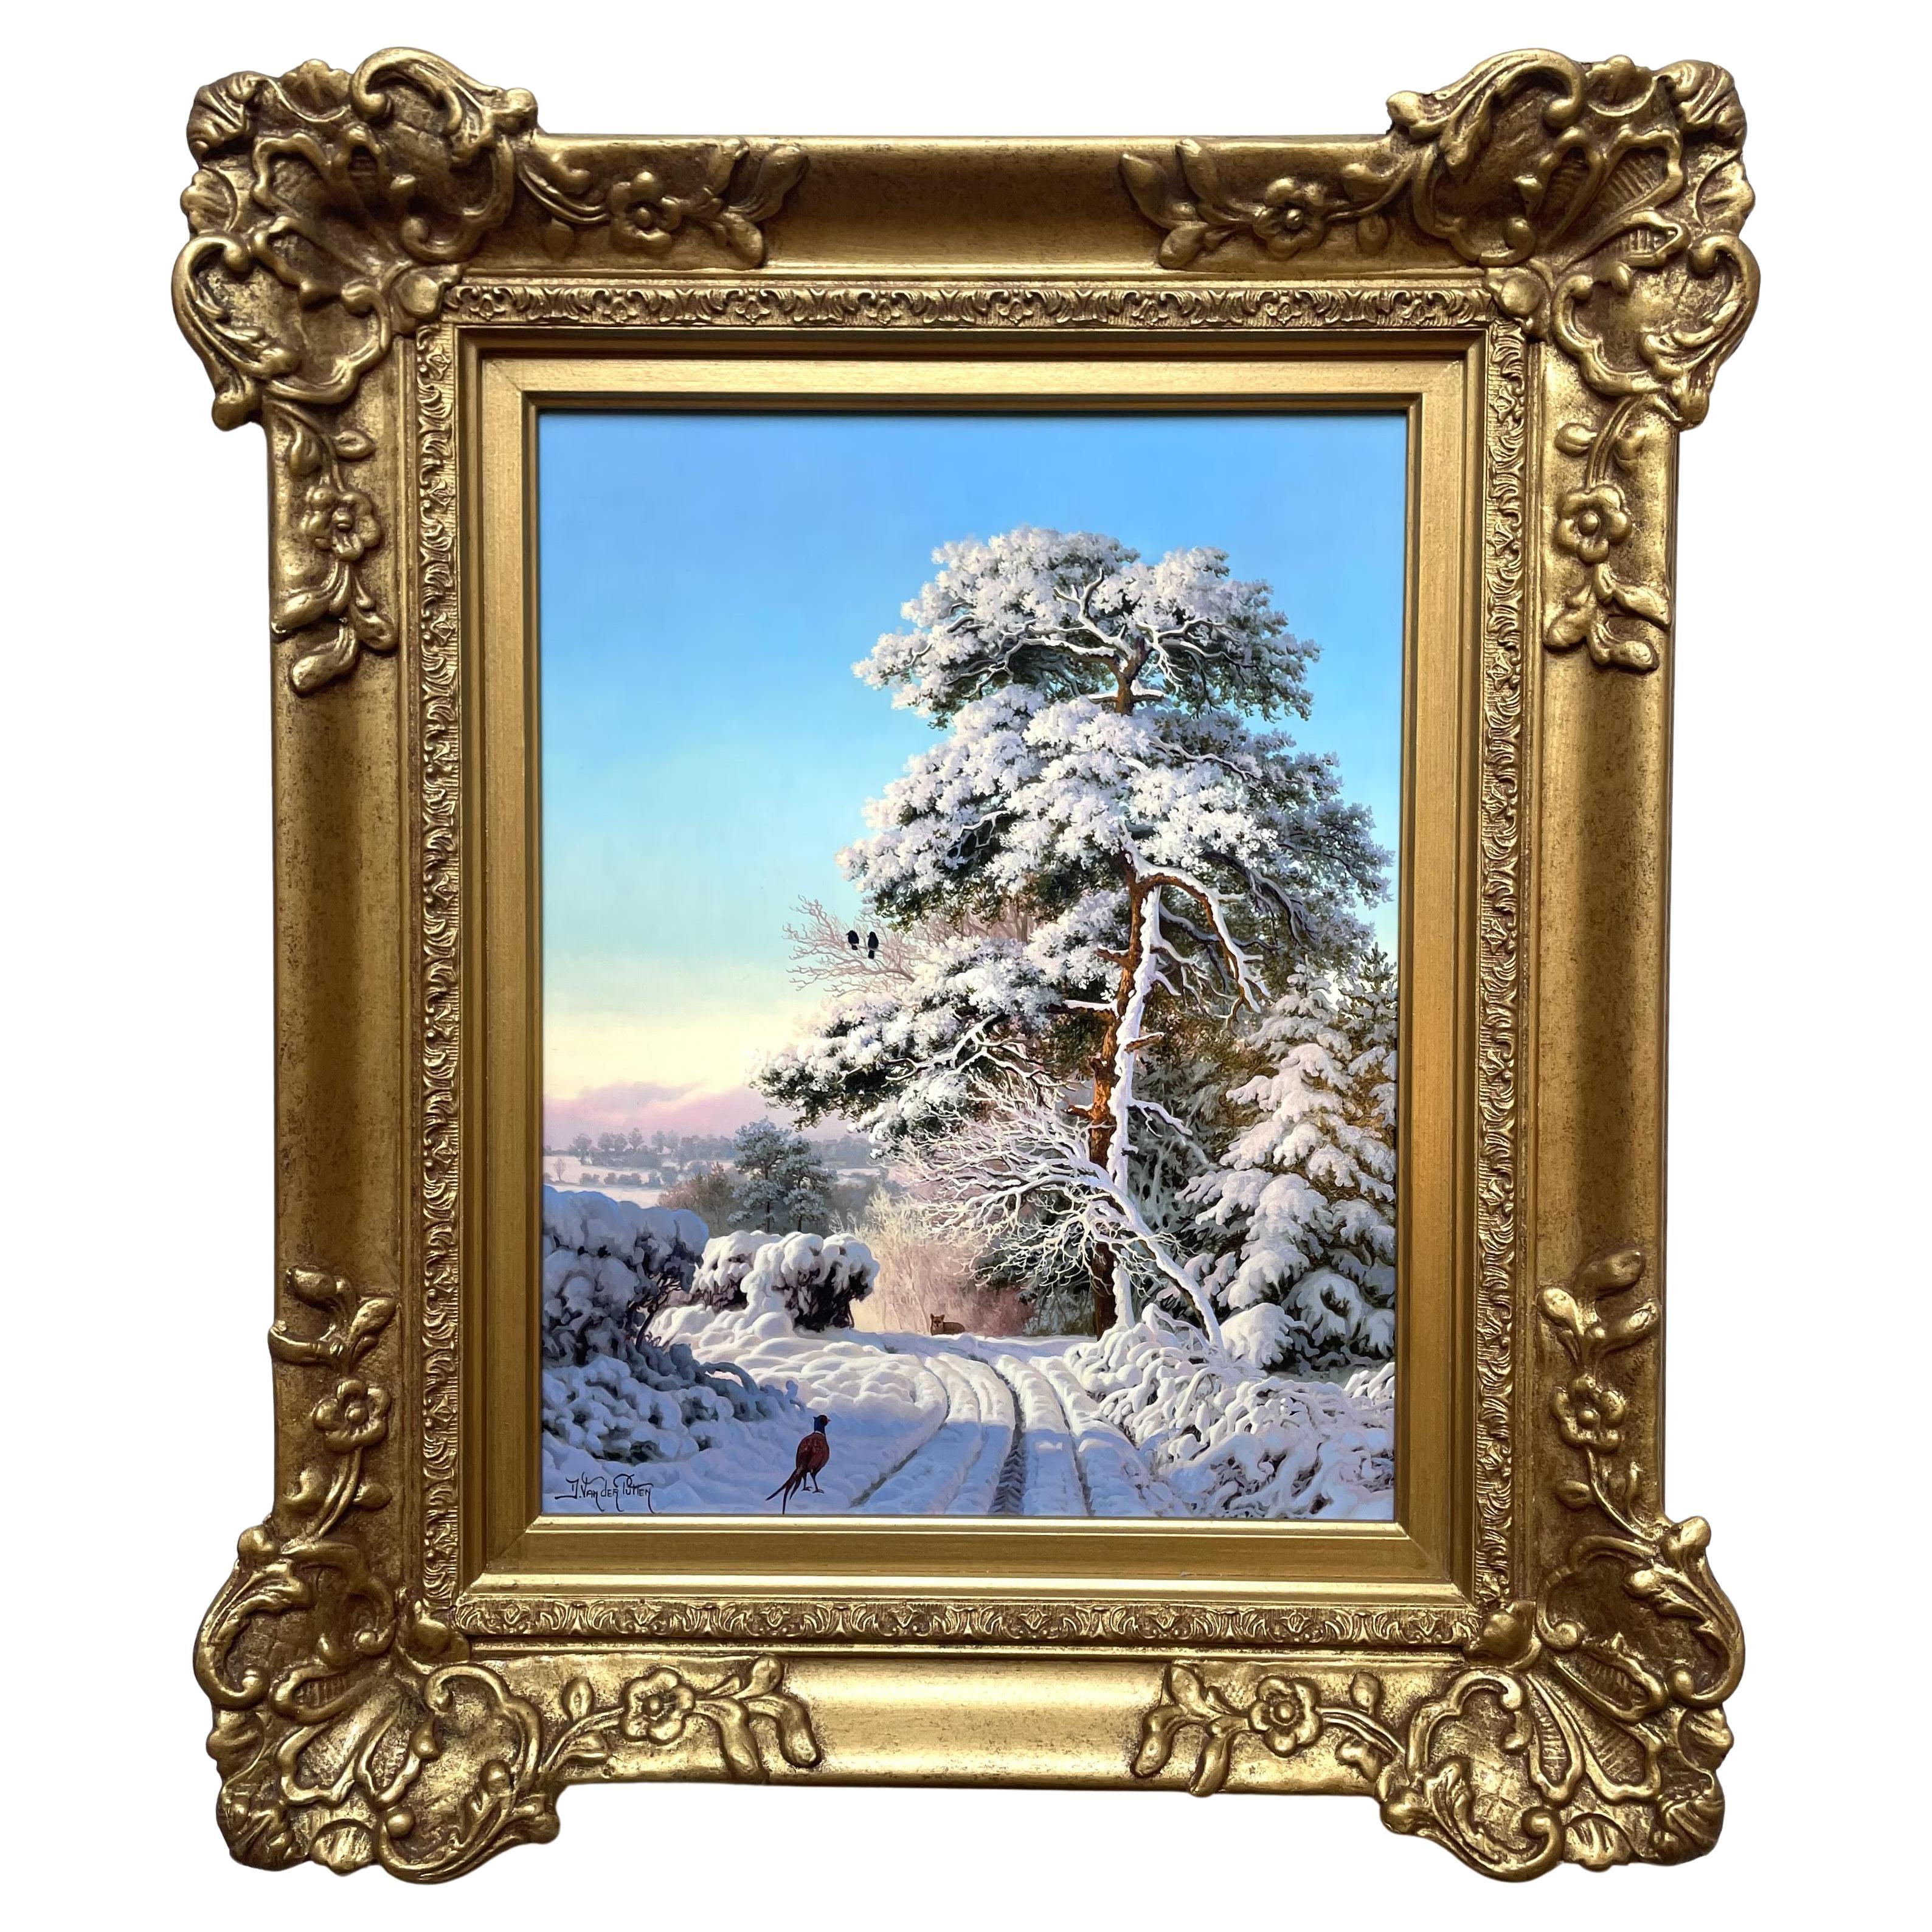 Daniel Van Der Putten - Peinture à l'huile - Scène de neige d'hiver - Hollywood Wicklow - Irlande